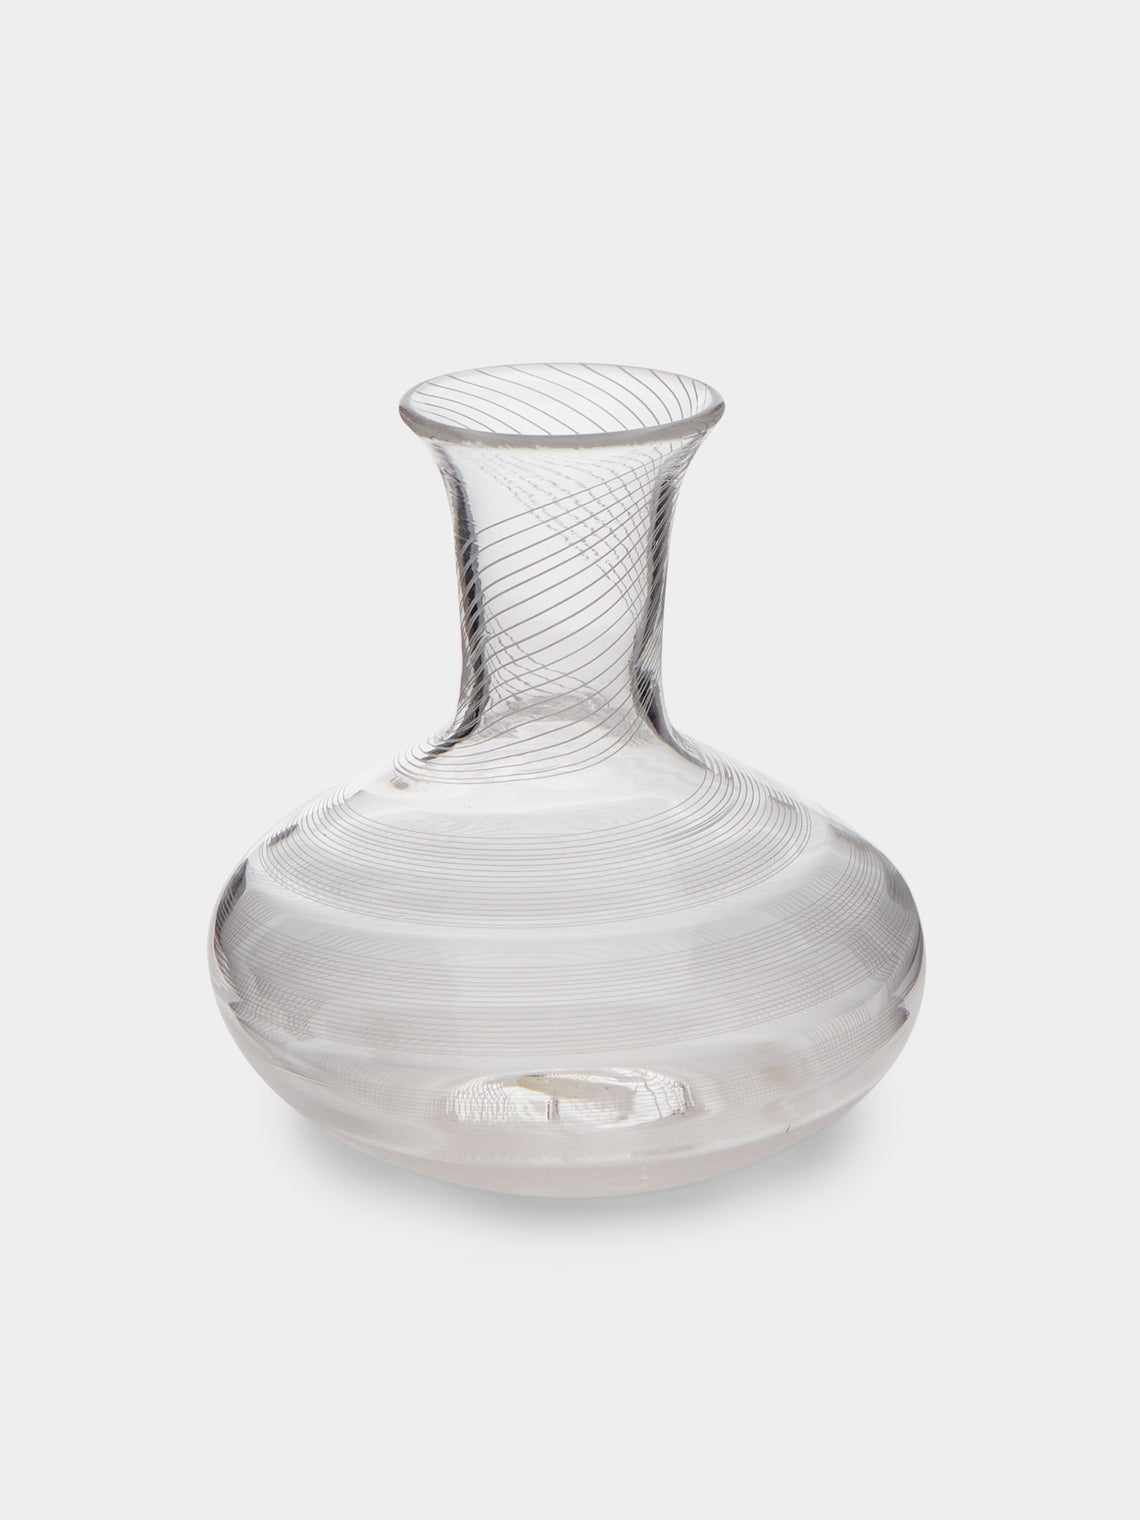 Andrew Iannazzi - Tendril Hand-Blown Glass Bud Vase -  - ABASK - 